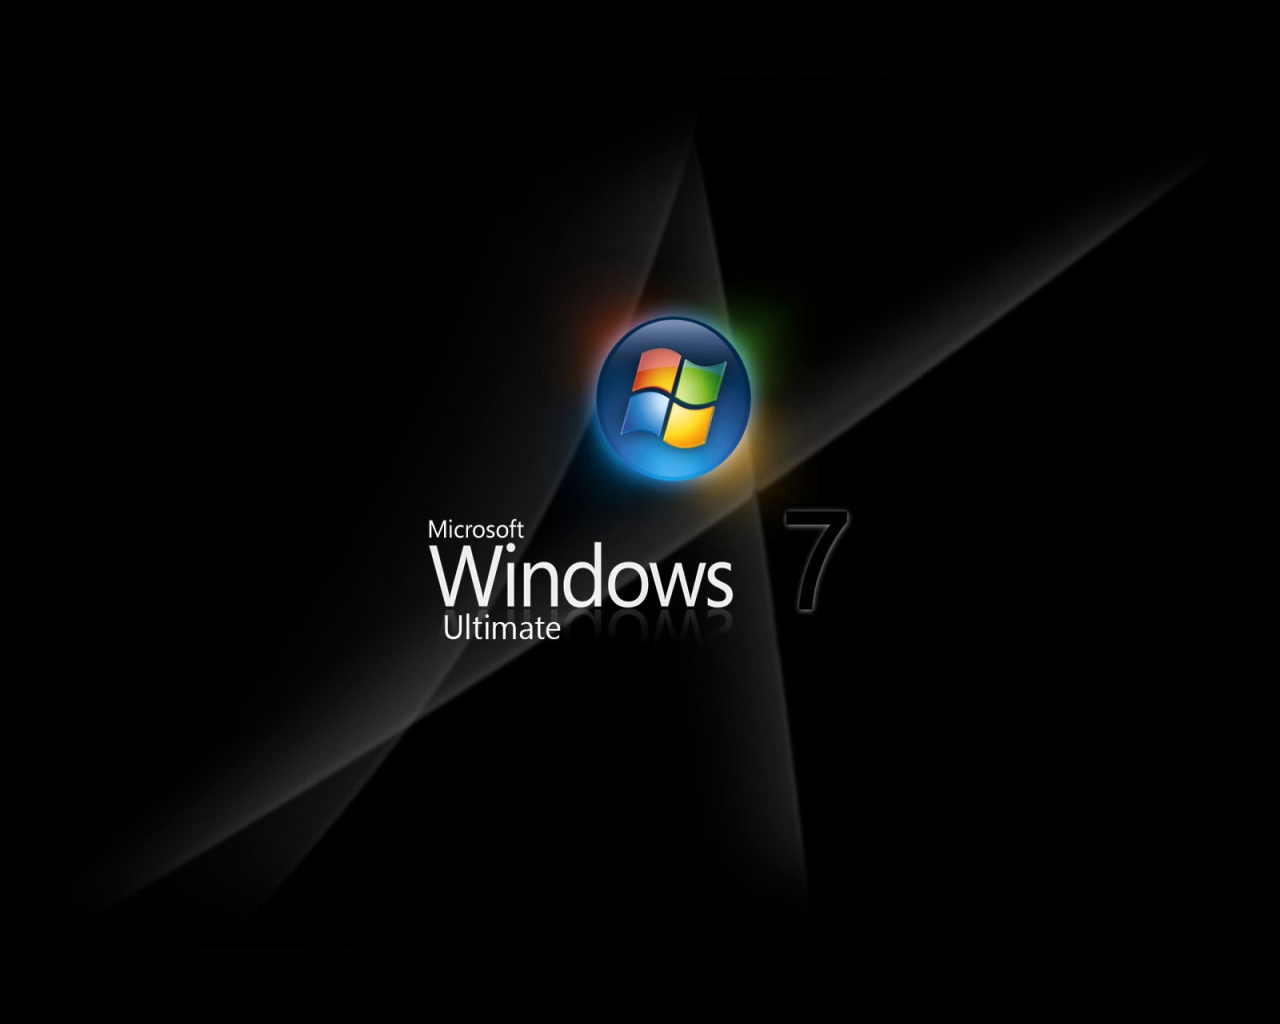 Windows Desktop Pc And Mac Wallpaper